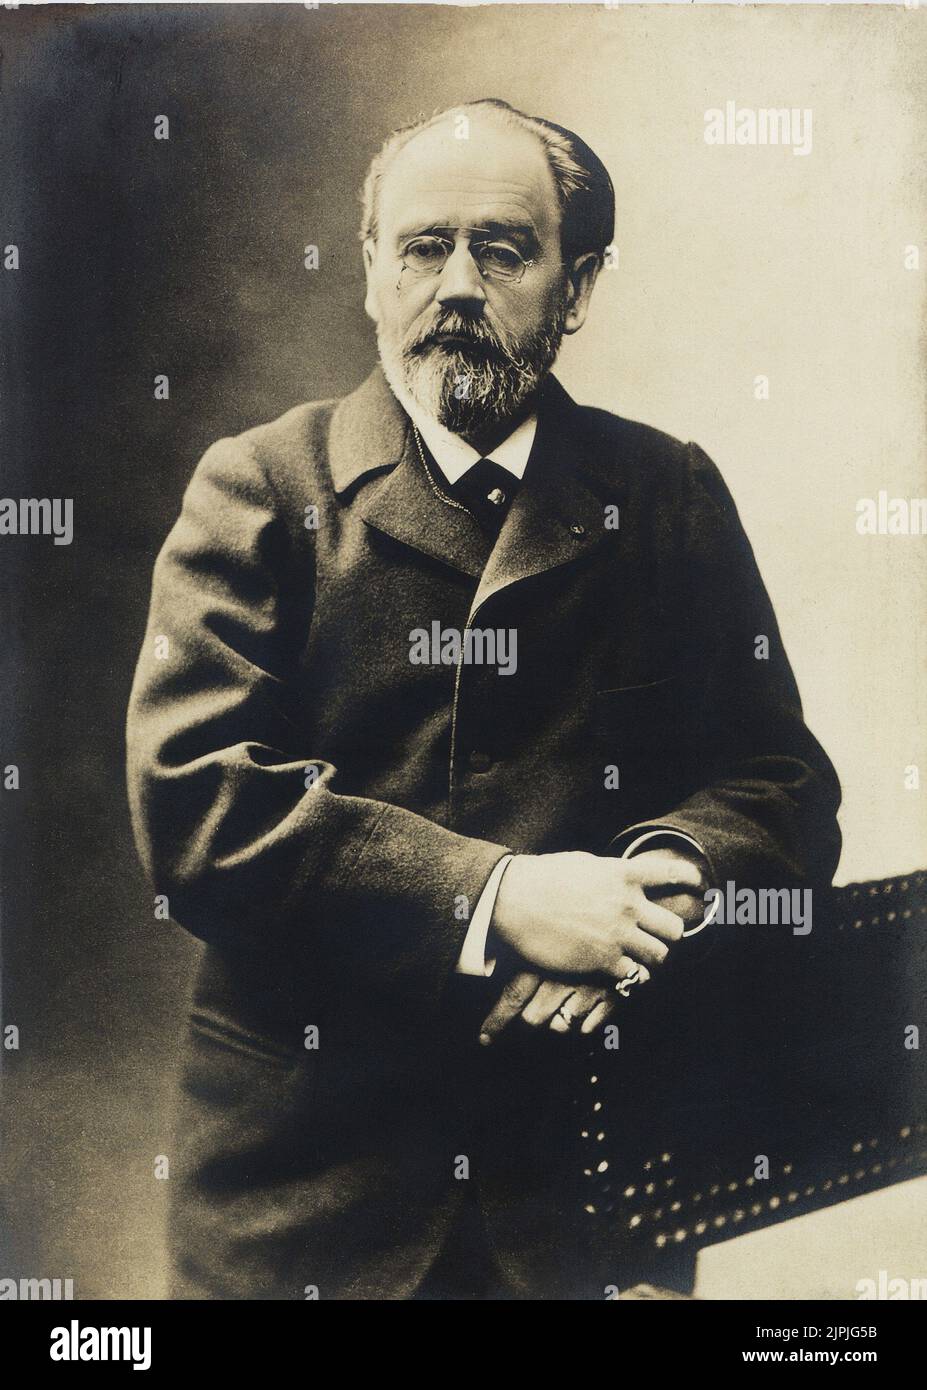 The celebrated french writer Emile ZOLA ( 1840 - 1902 ) - NATURALISMO - NATURALISM - SCRITTORE - LETTERATURA - LITERATURE - OCCHIALI - pincenez - pince-nez - glasses - barba e baffi - beard ---- Archivio GBB Stock Photo